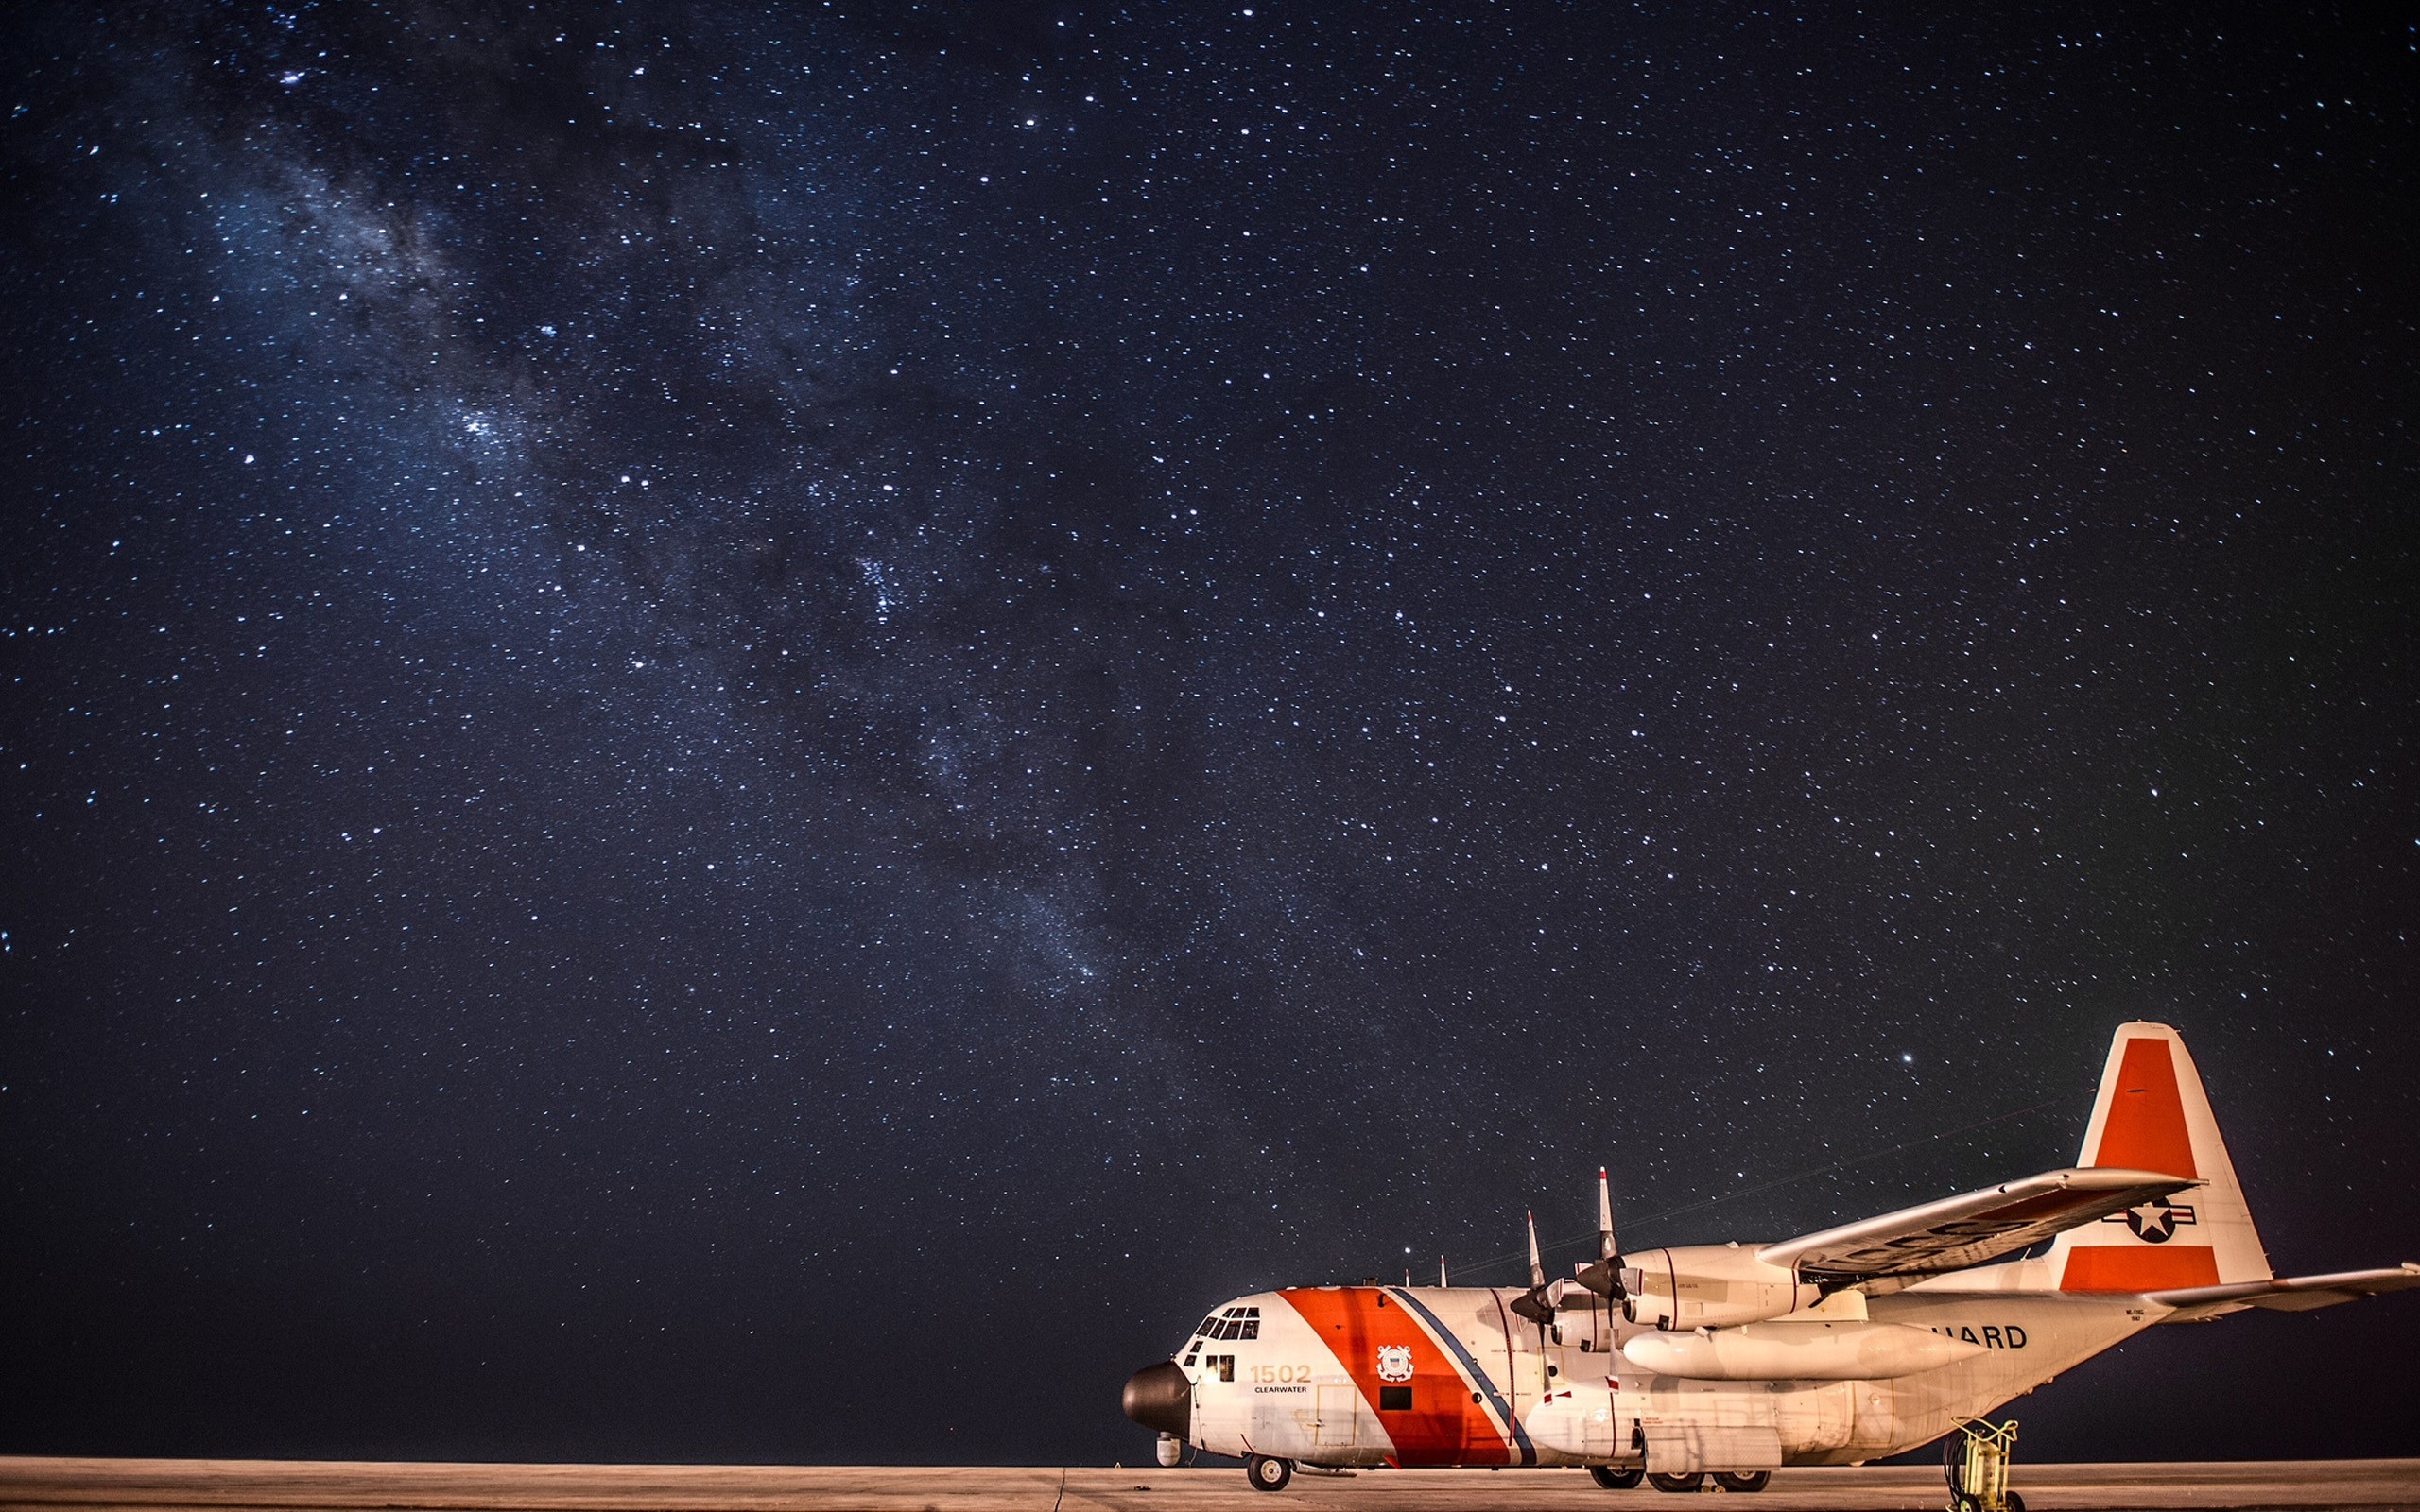 General 2560x1600 Milky Way space coast guard Lockheed C-130 Hercules sky vehicle aircraft United States Coast Guard starry night